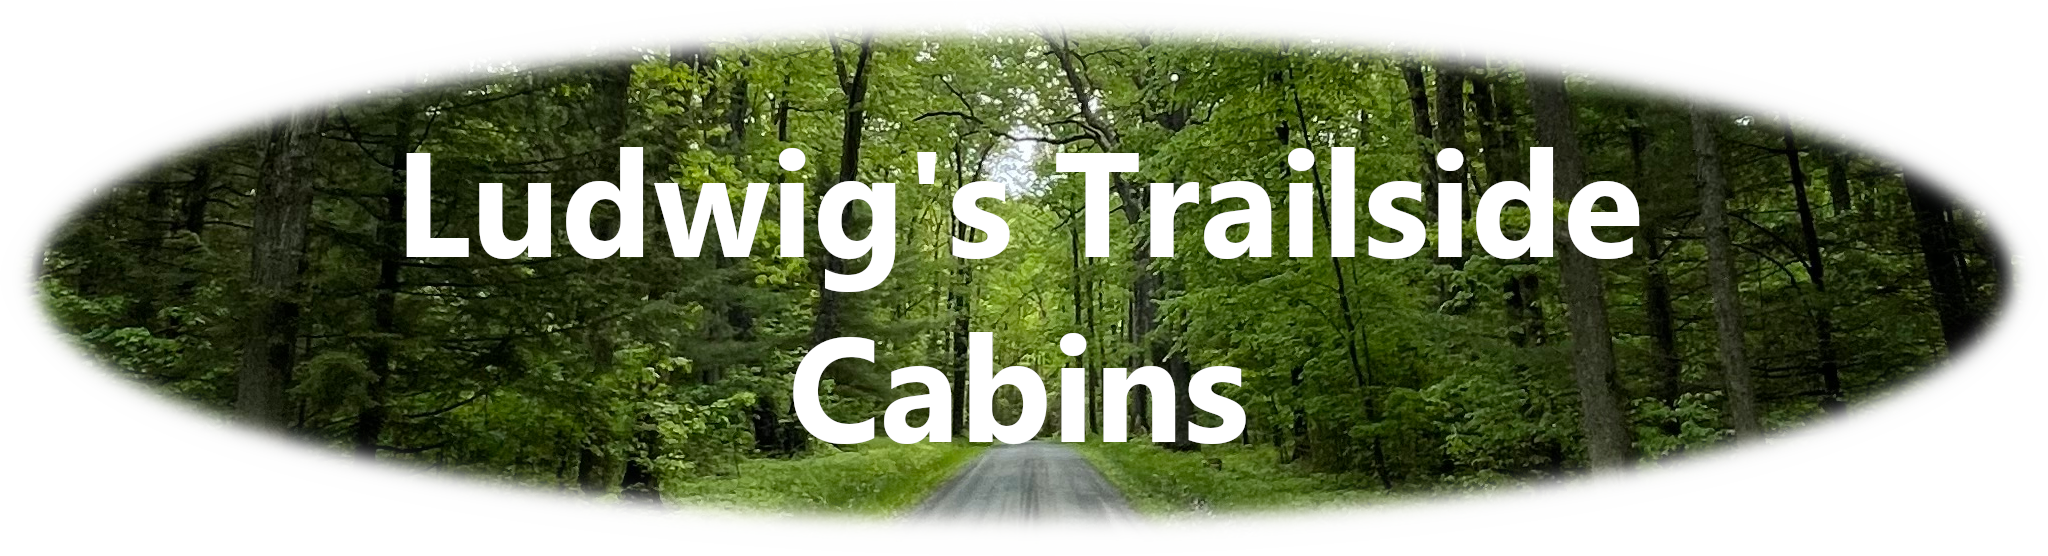 Ludwig's Trailside Cabins logo